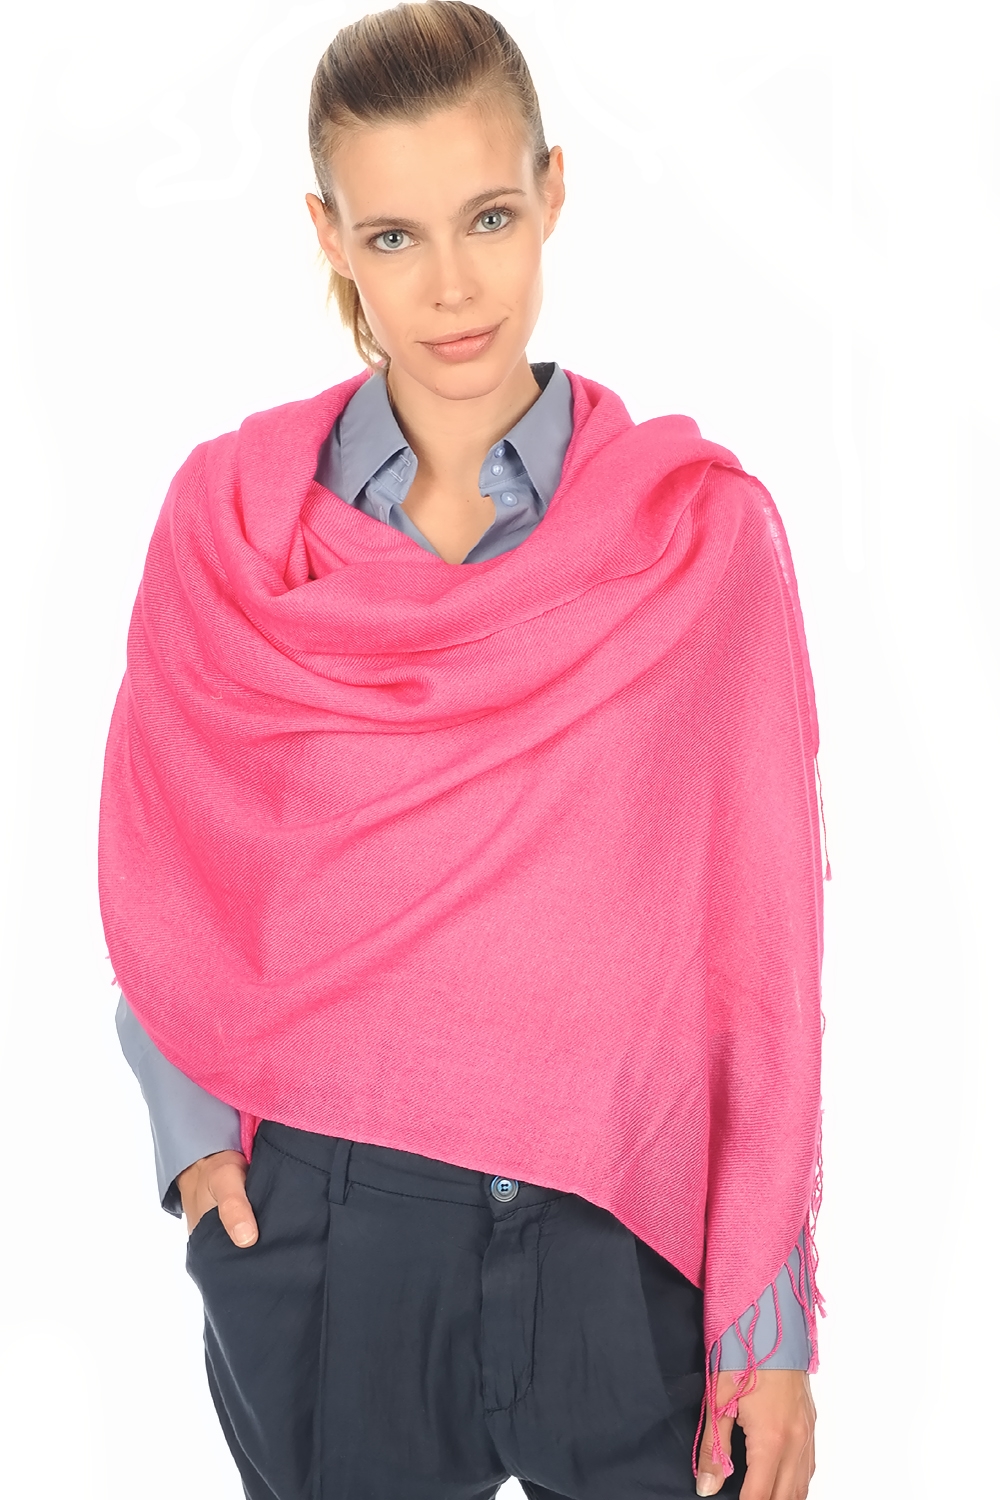 Cashmere ladies shawls diamant shocking pink 201 cm x 71 cm